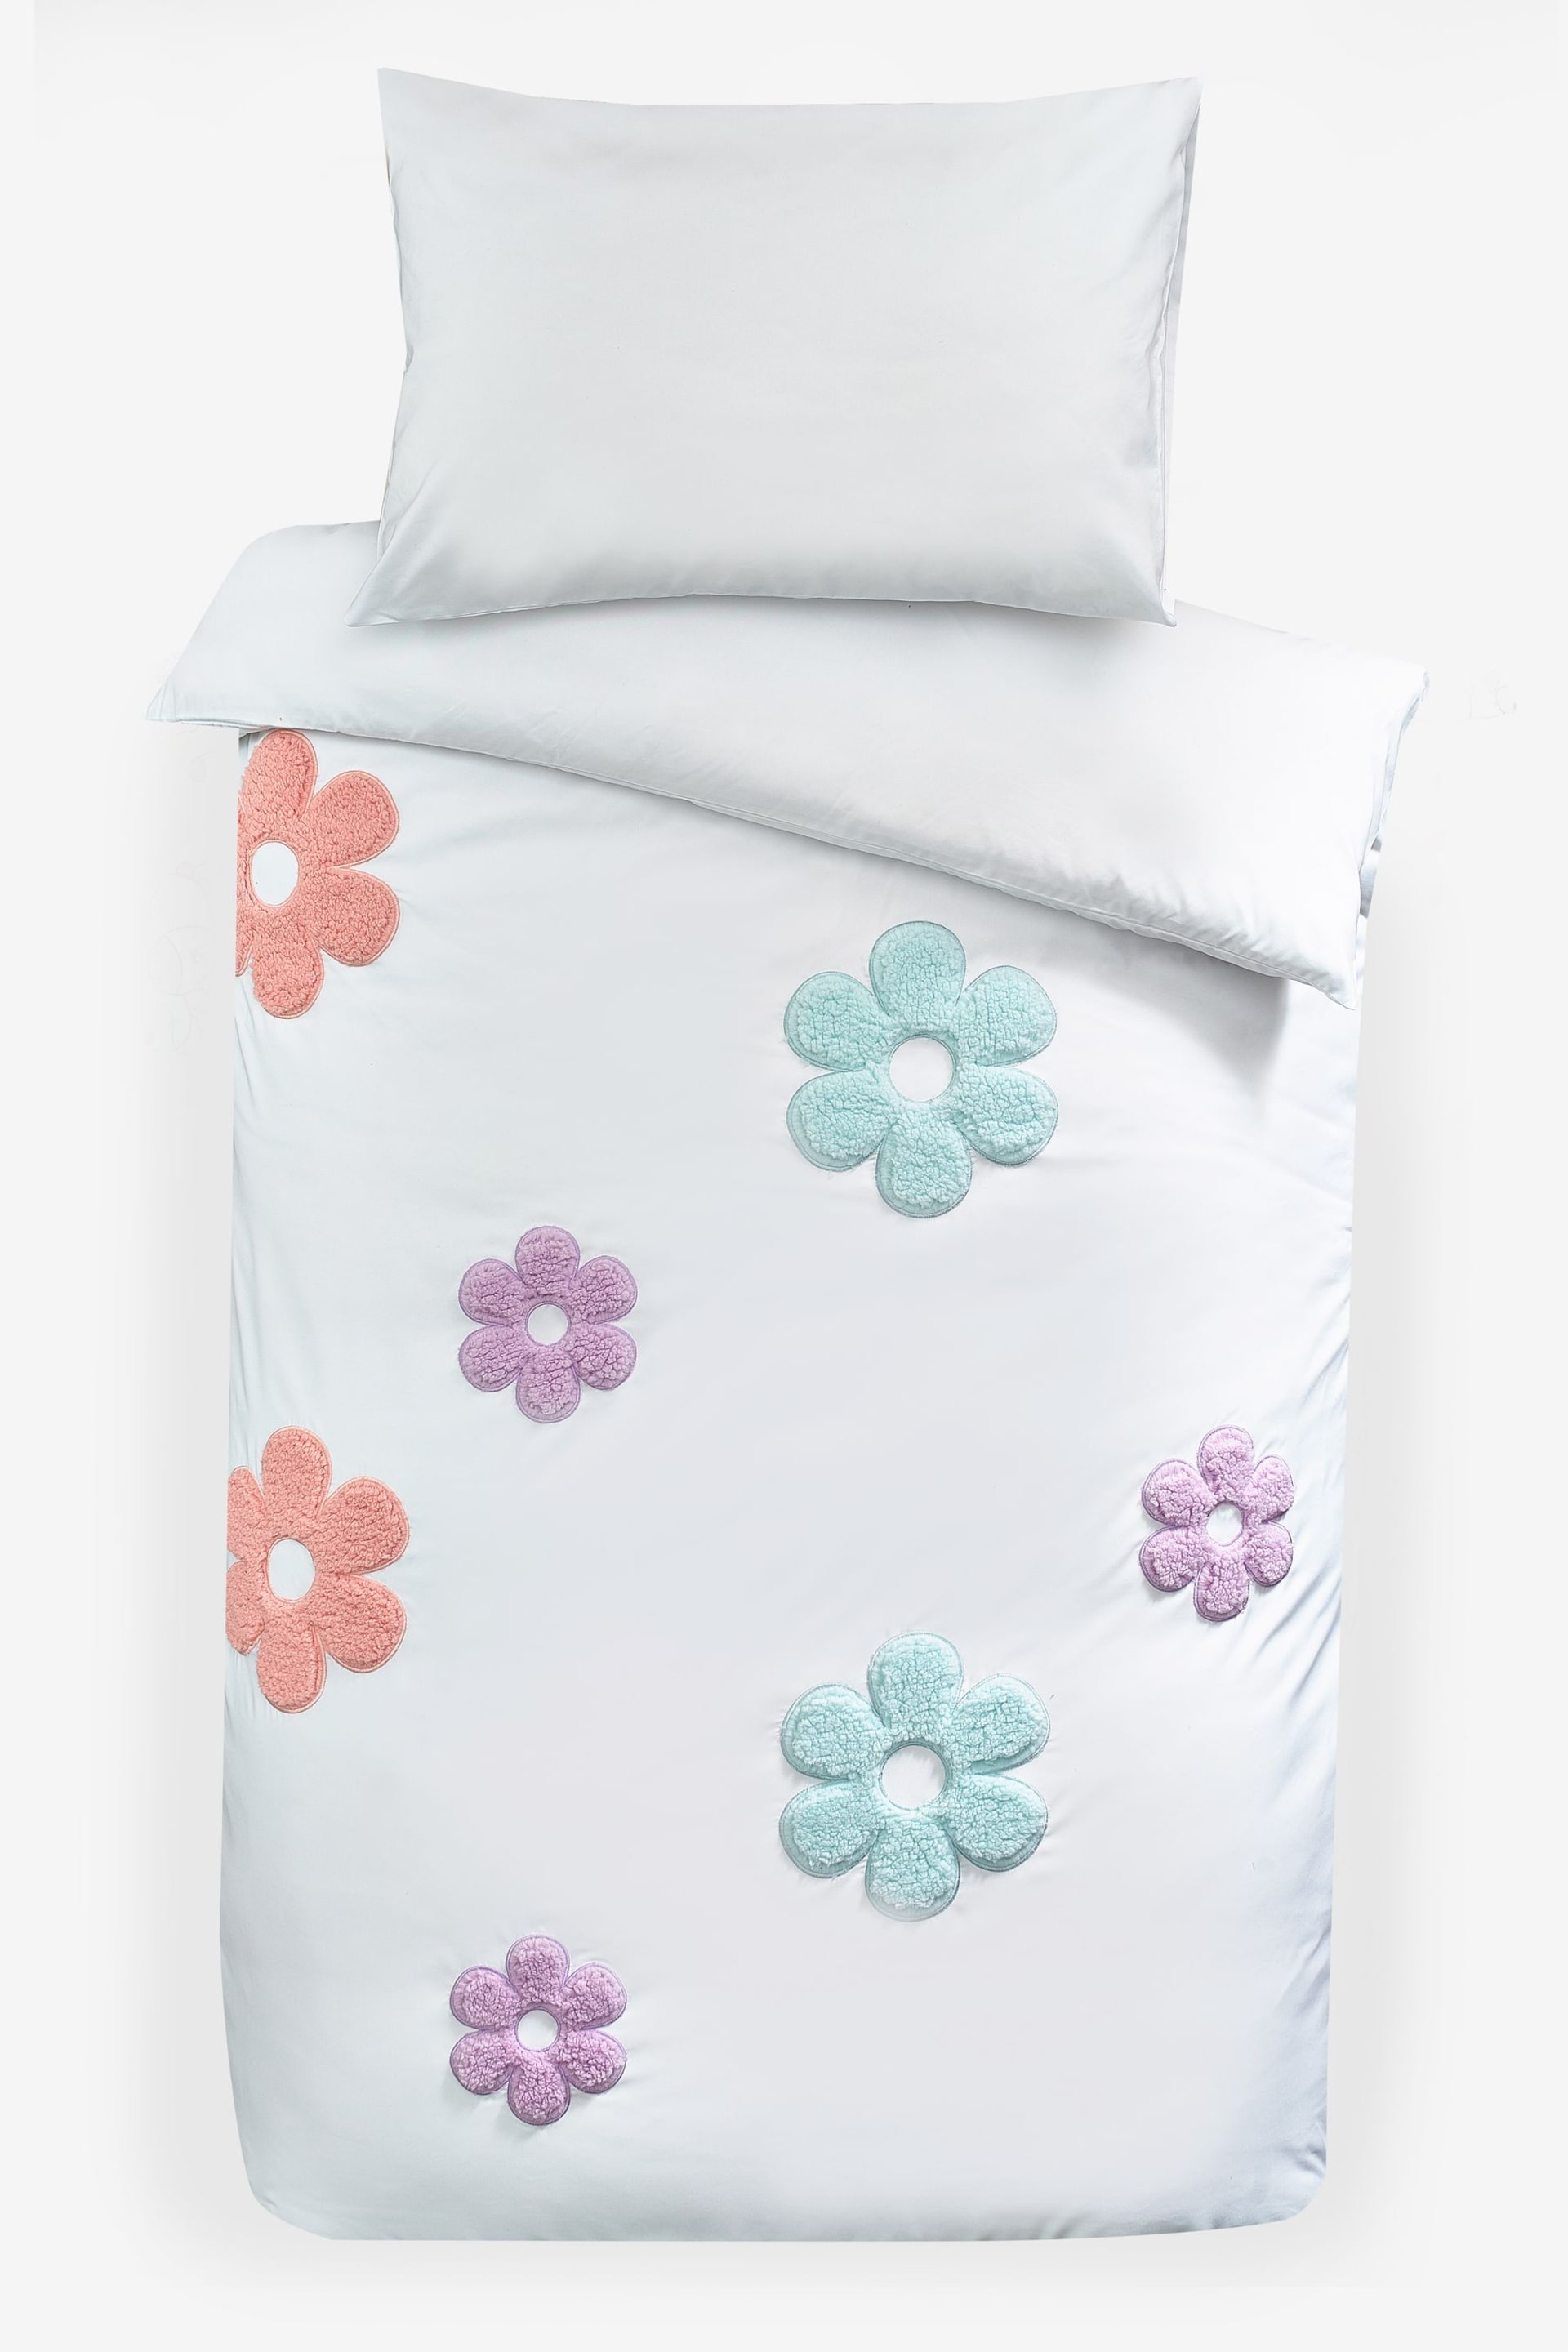 White Appliqué Daisy Flower Duvet Cover and Pillowcase Set - Image 5 of 5